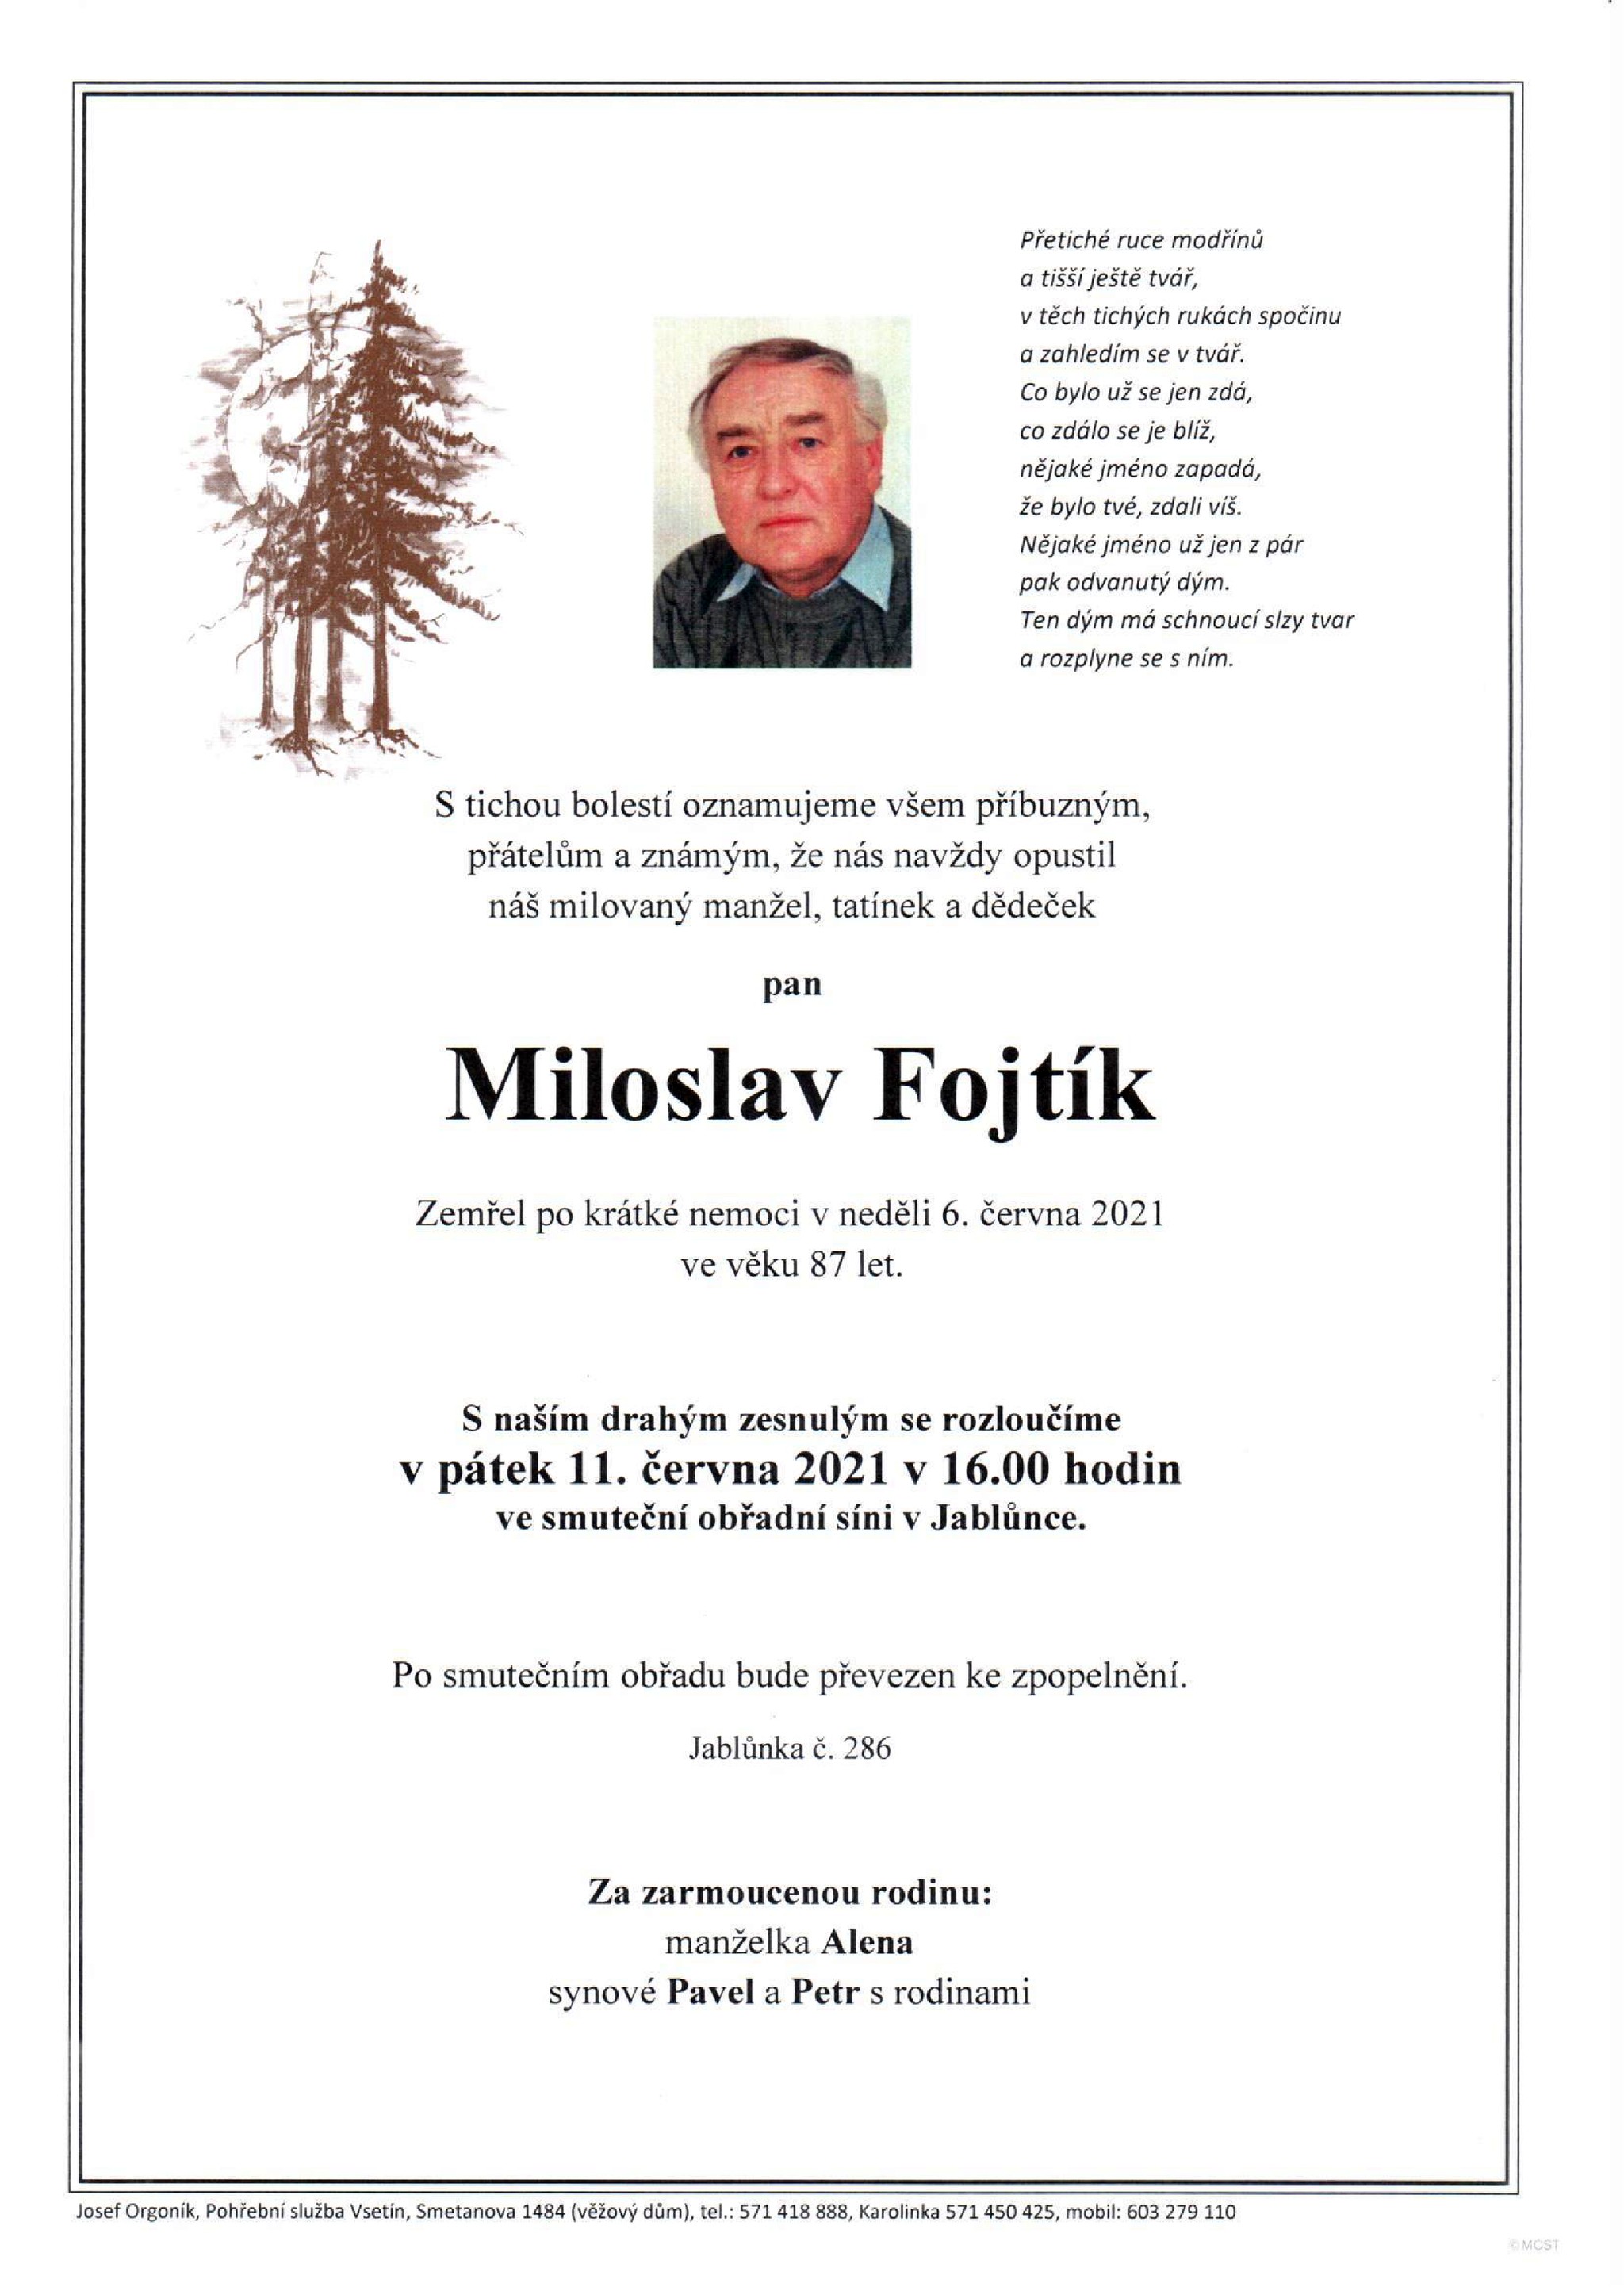 Miloslav Fojtík